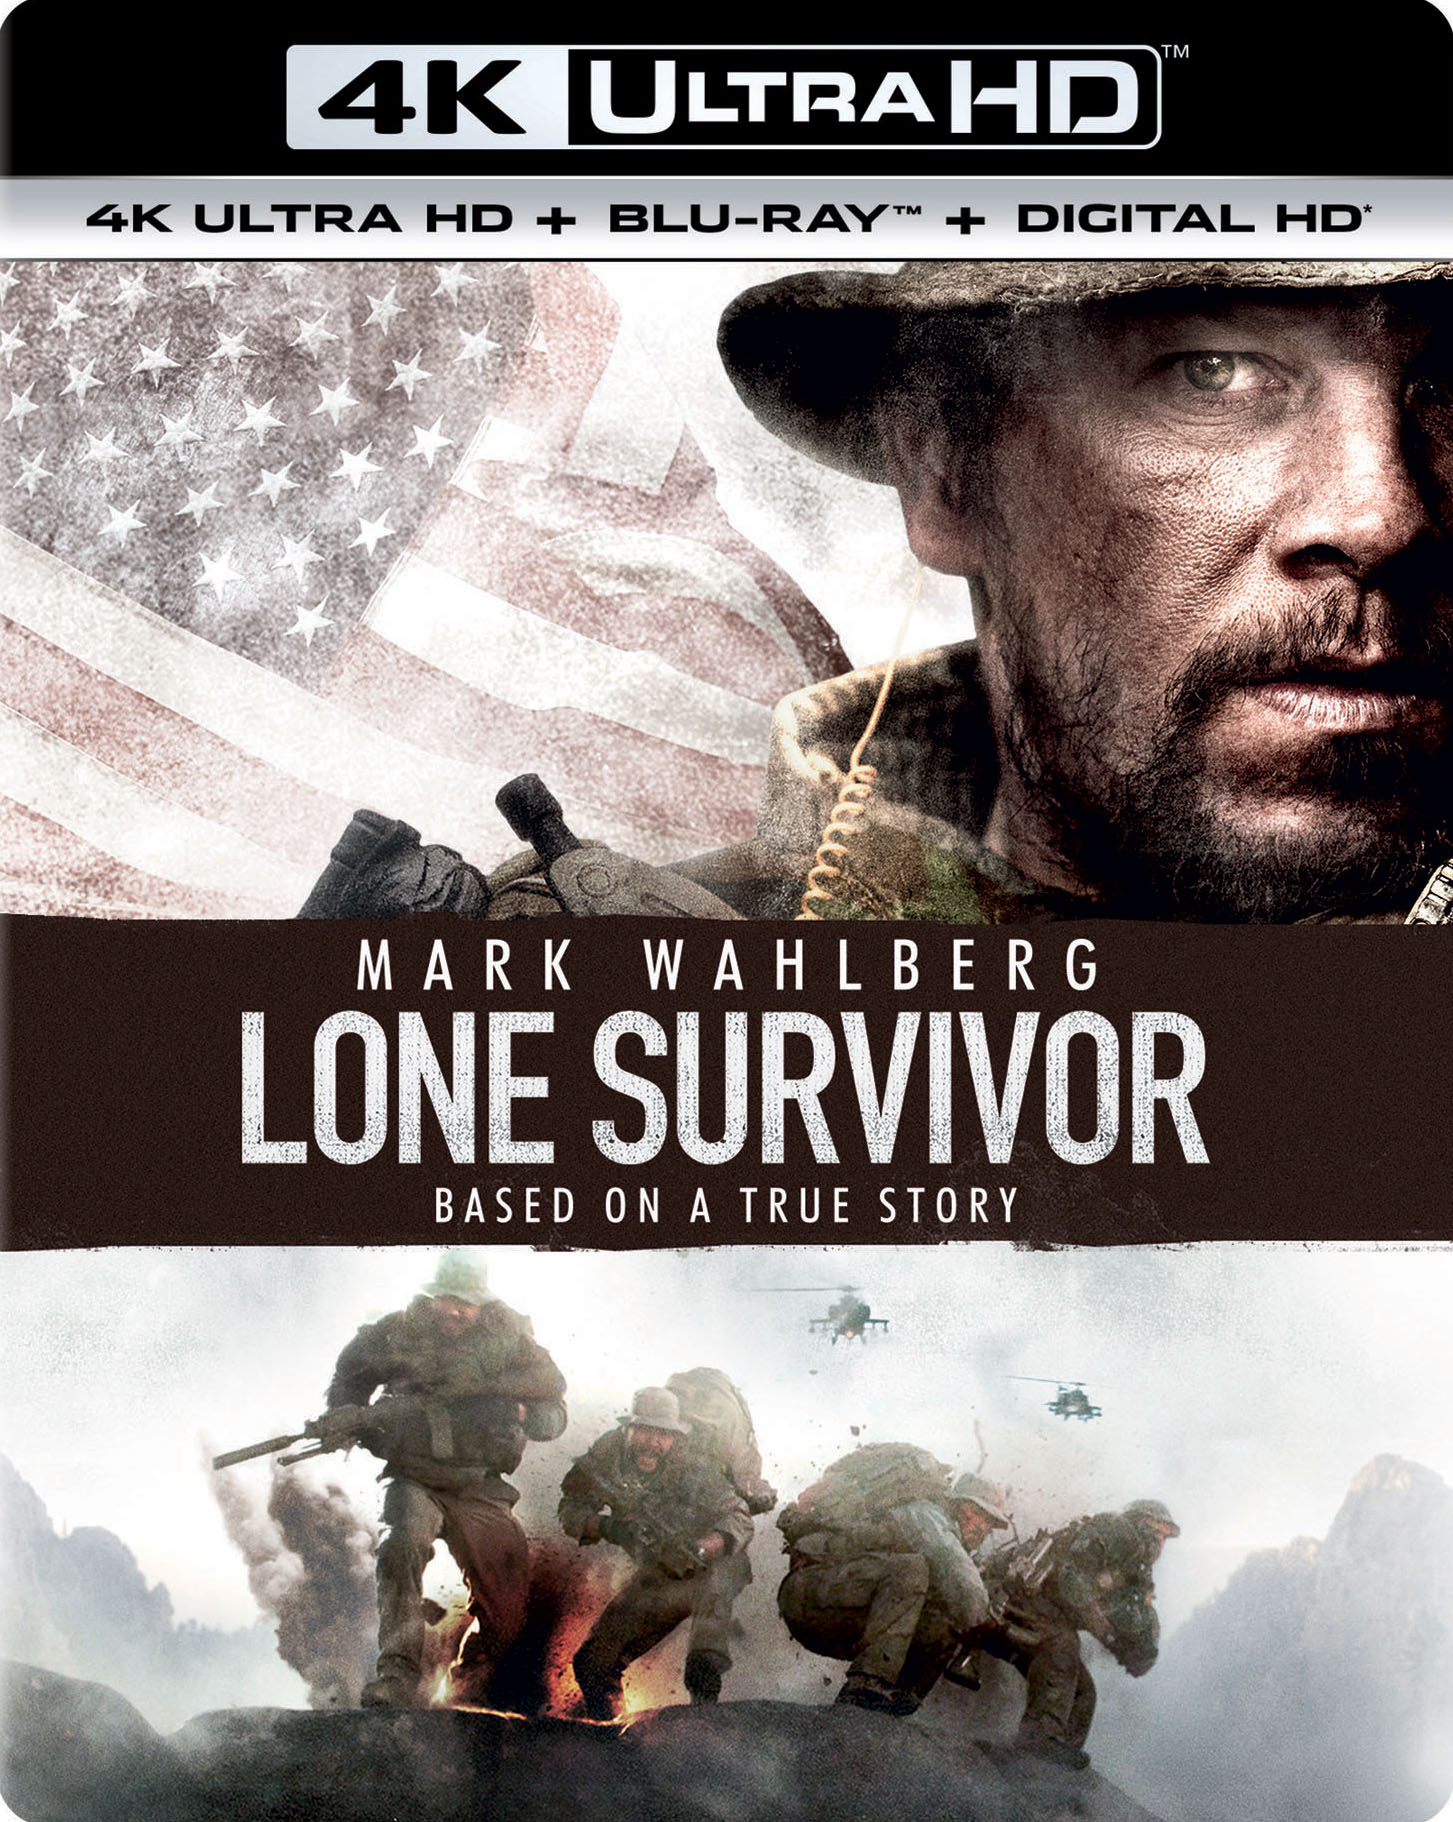 LONE SURVIVOR (2013) review